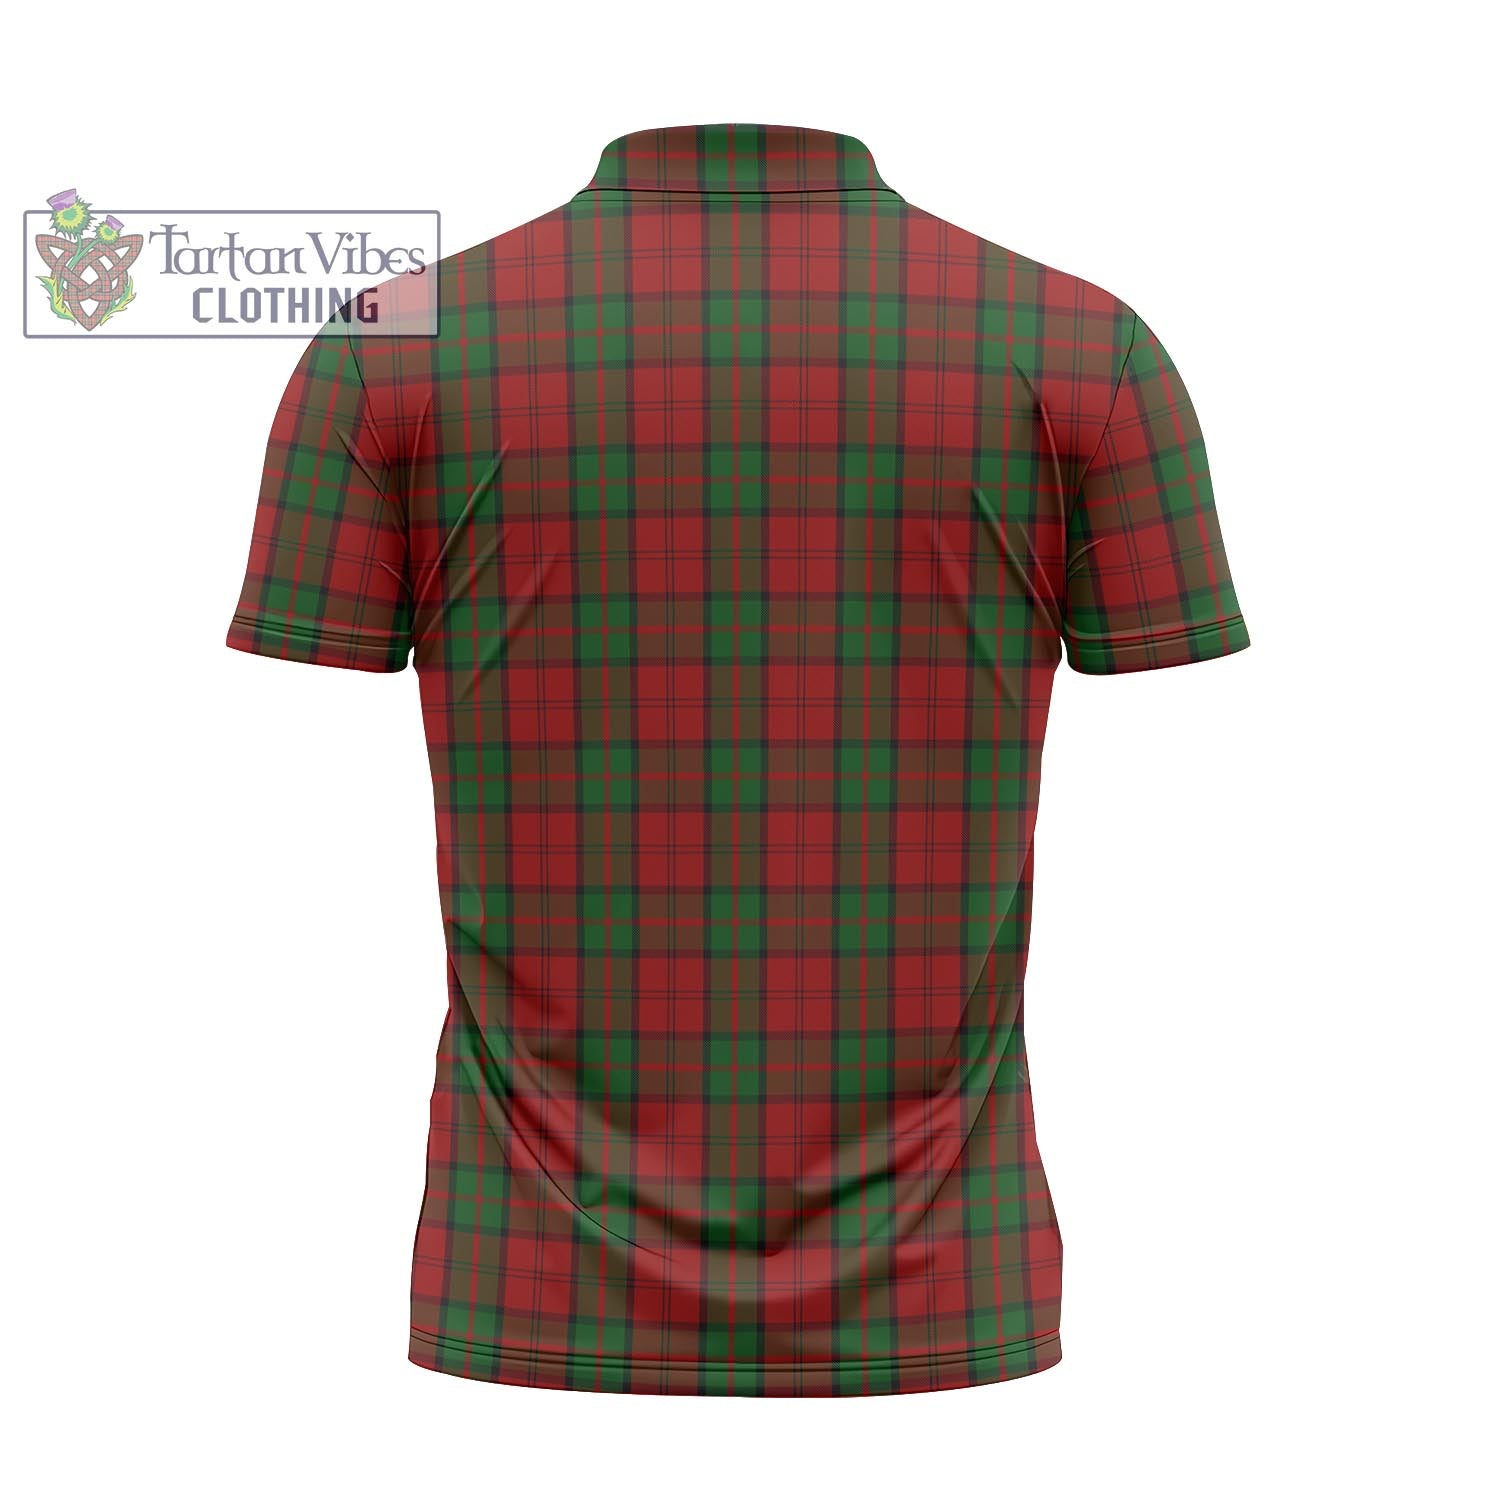 Tartan Vibes Clothing Dunbar Tartan Zipper Polo Shirt with Family Crest